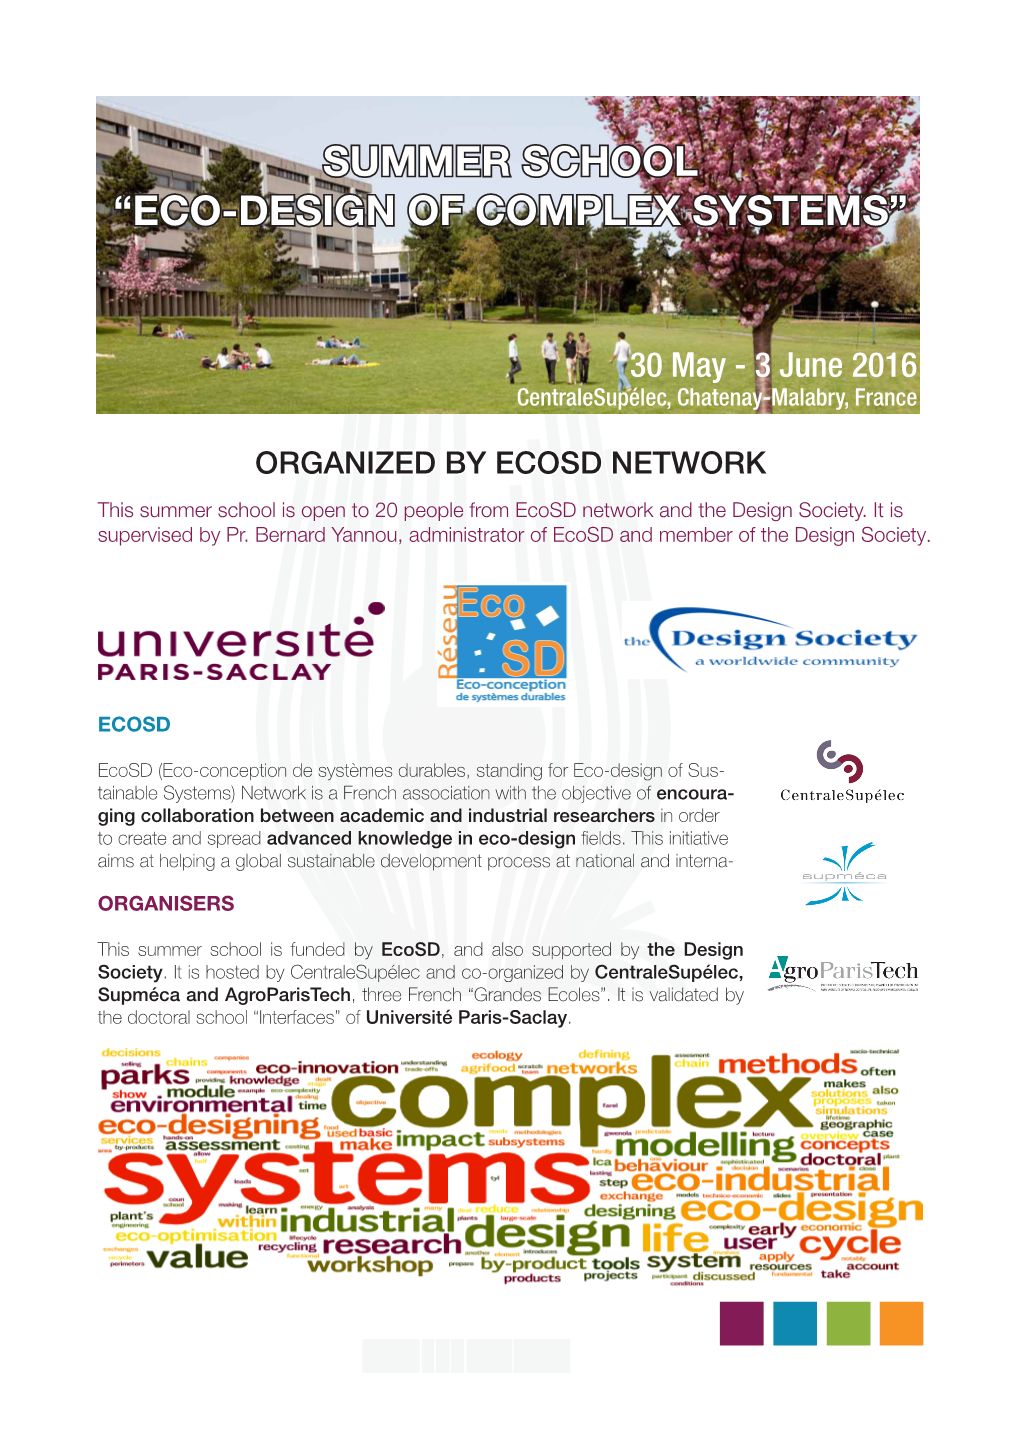 Eco-Design of Complex Systems”